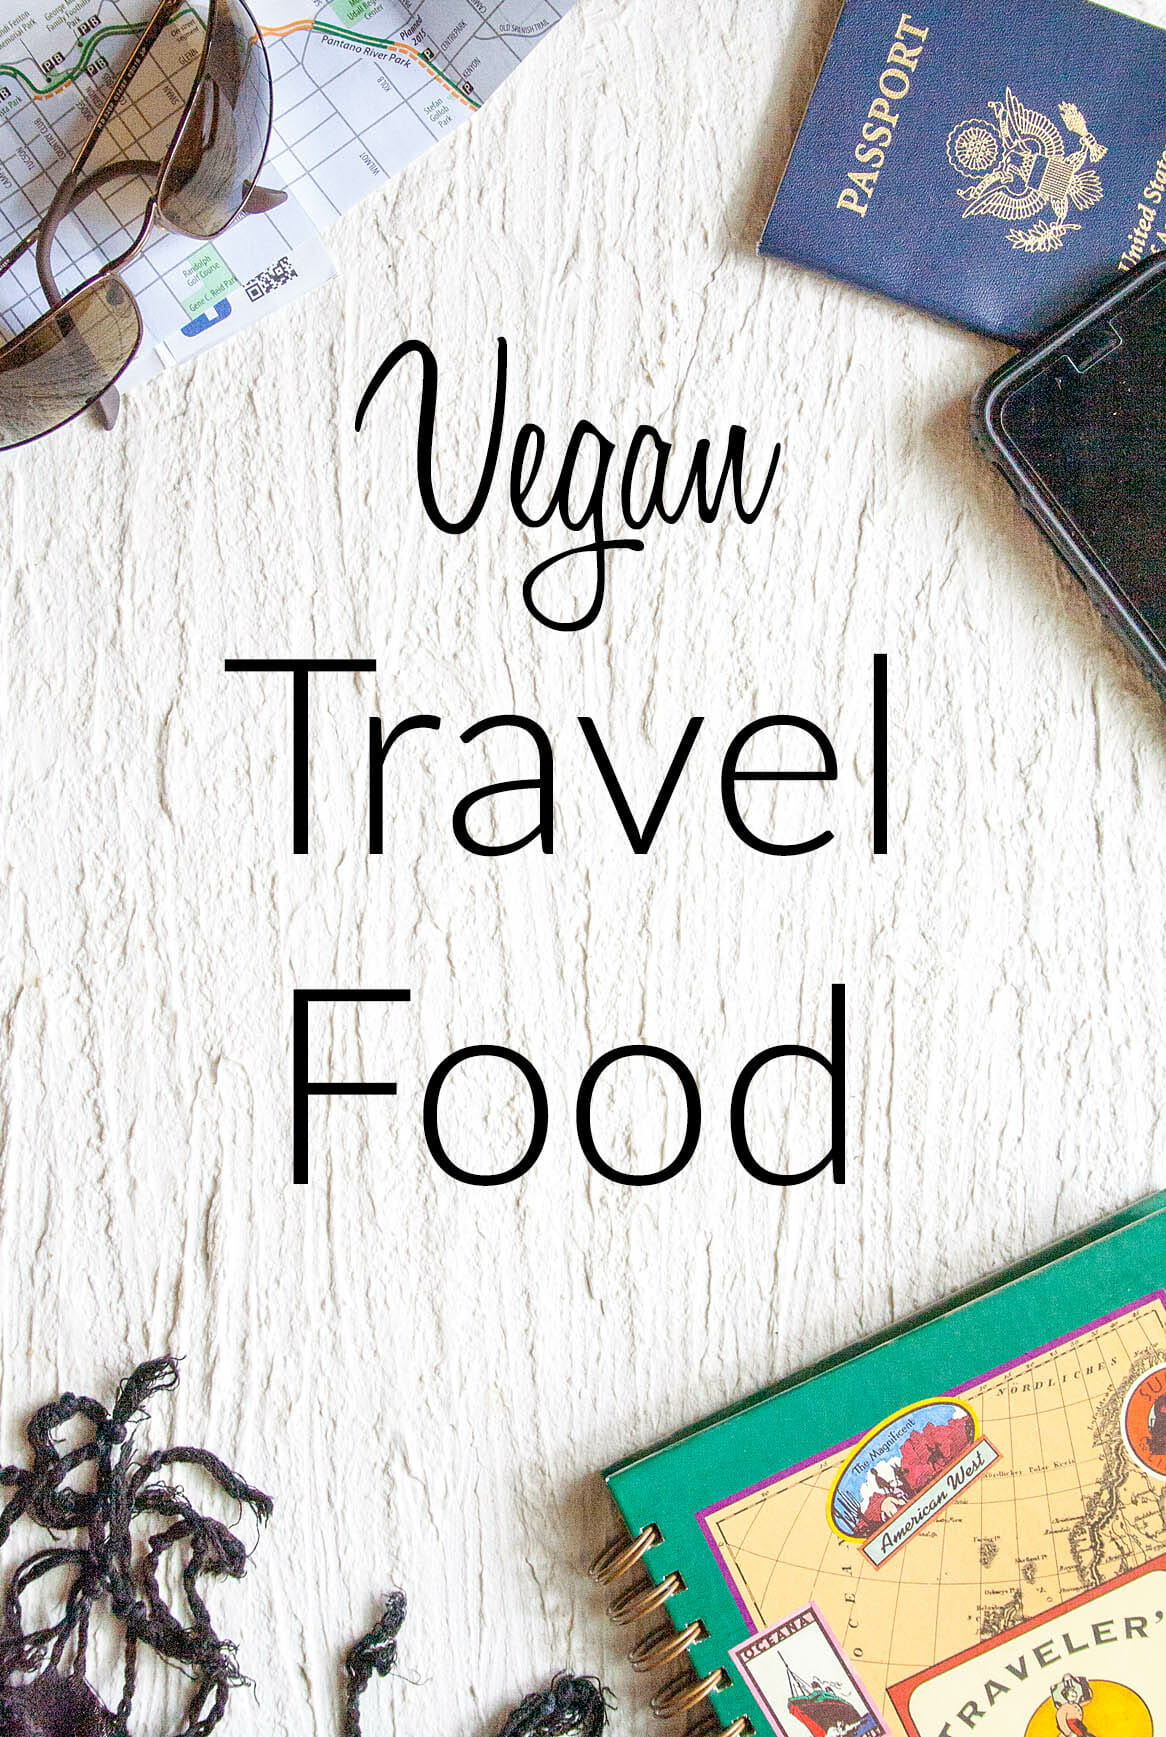 Vegan Travel Food photo with text.